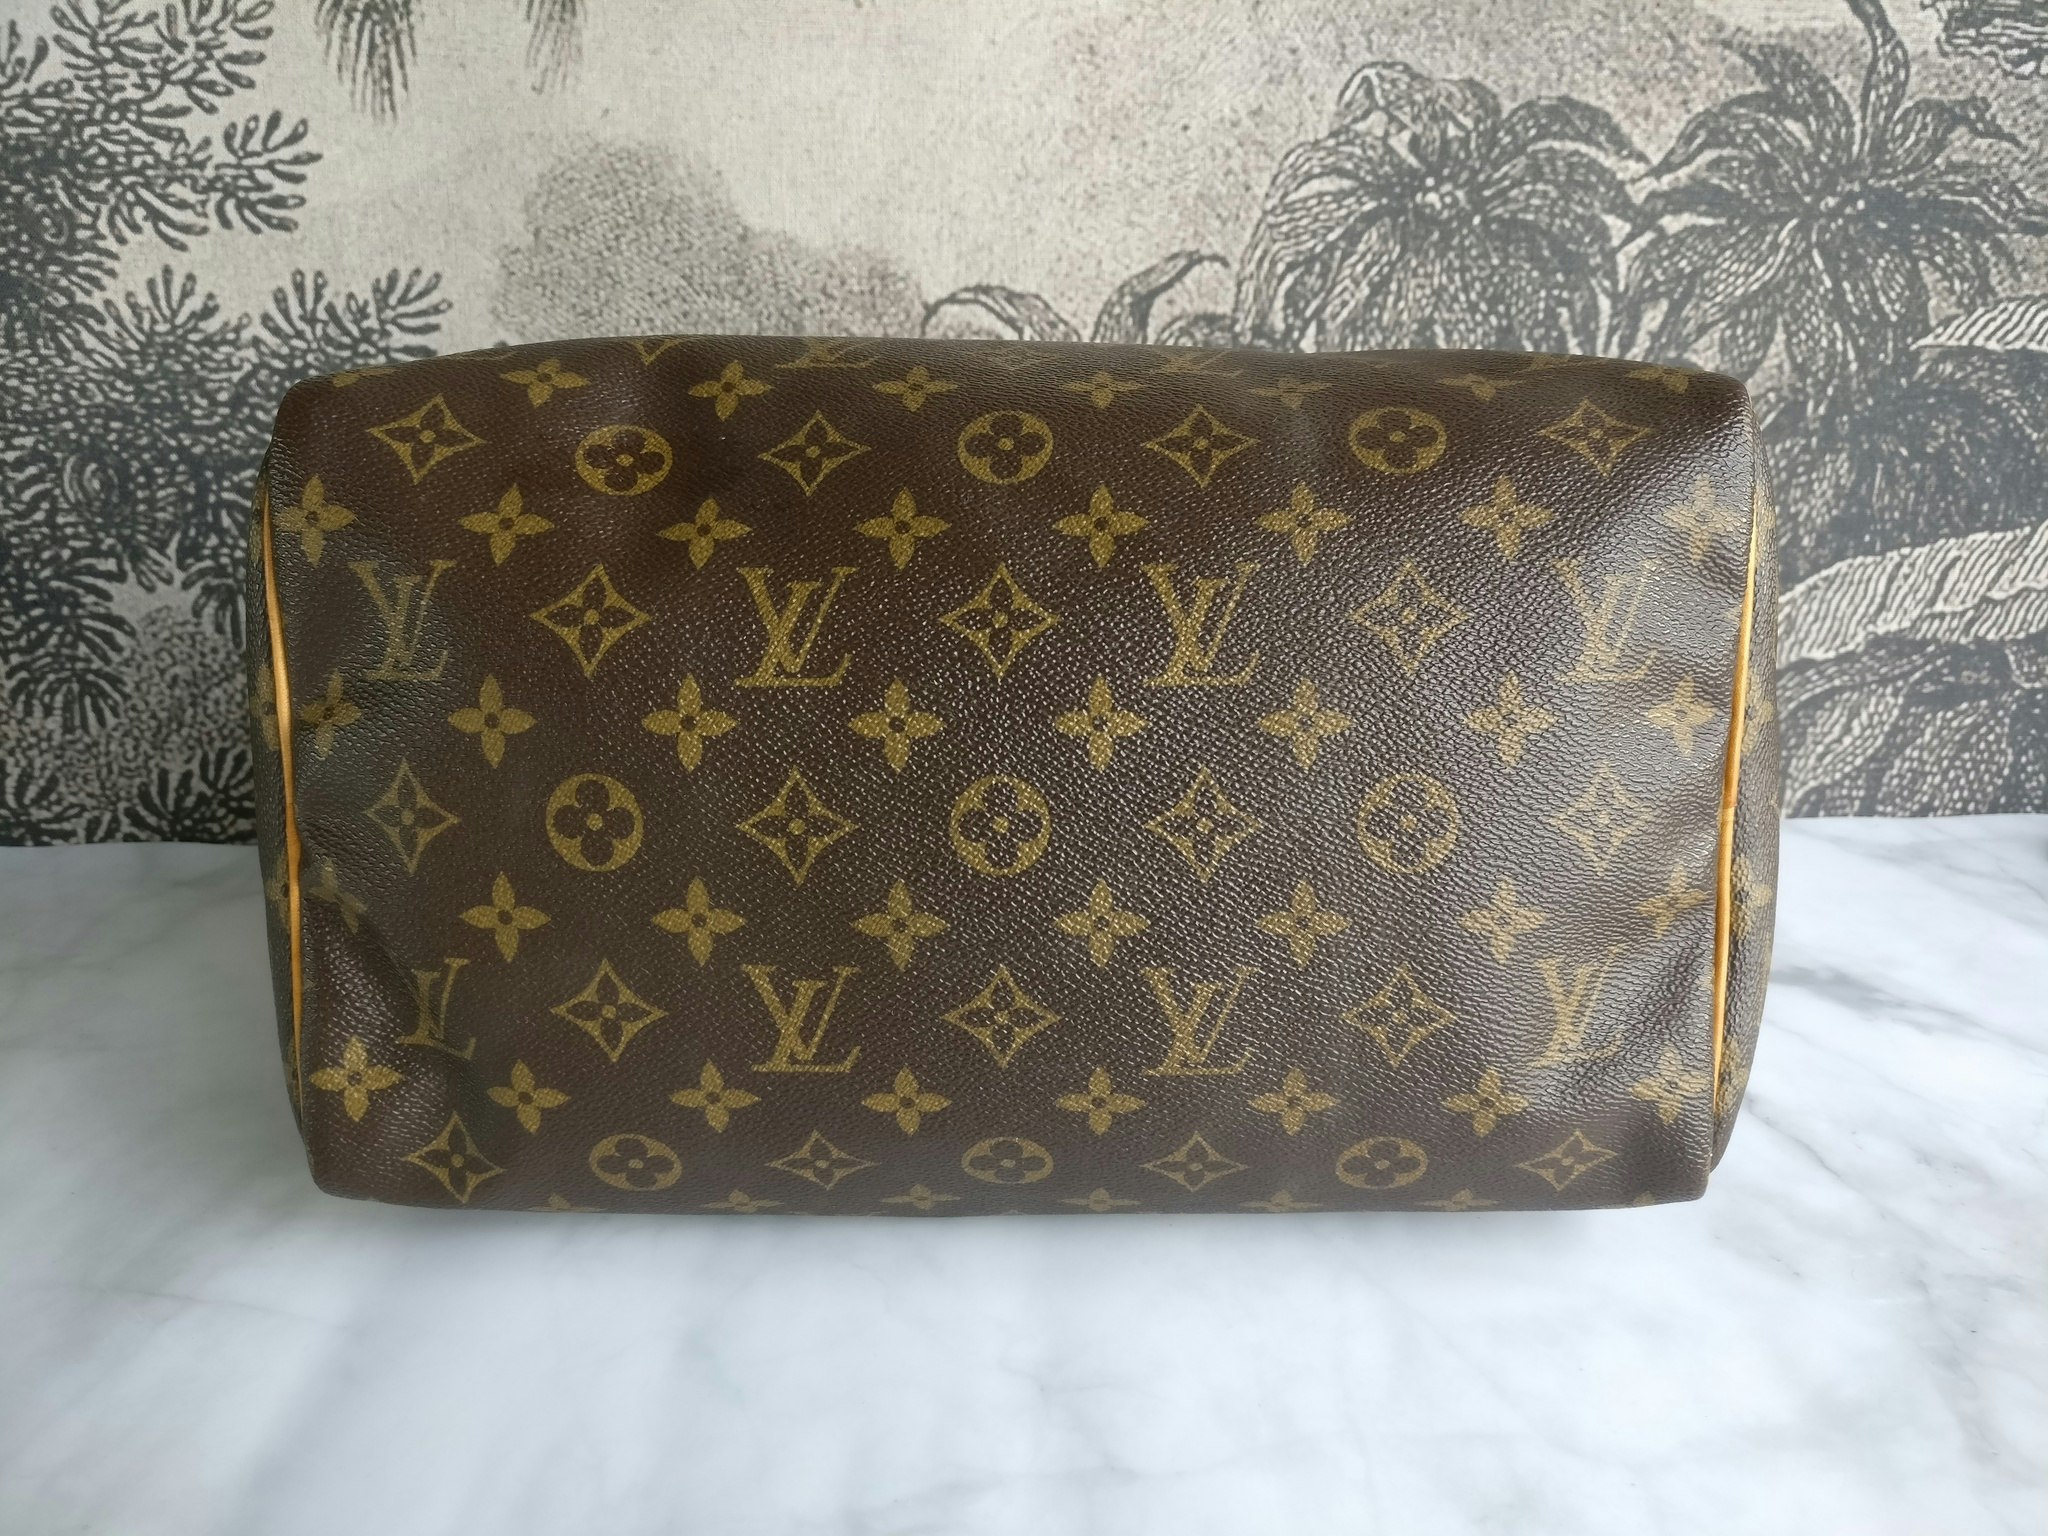 Louis Vuitton Speedy 30 - Good or Bag